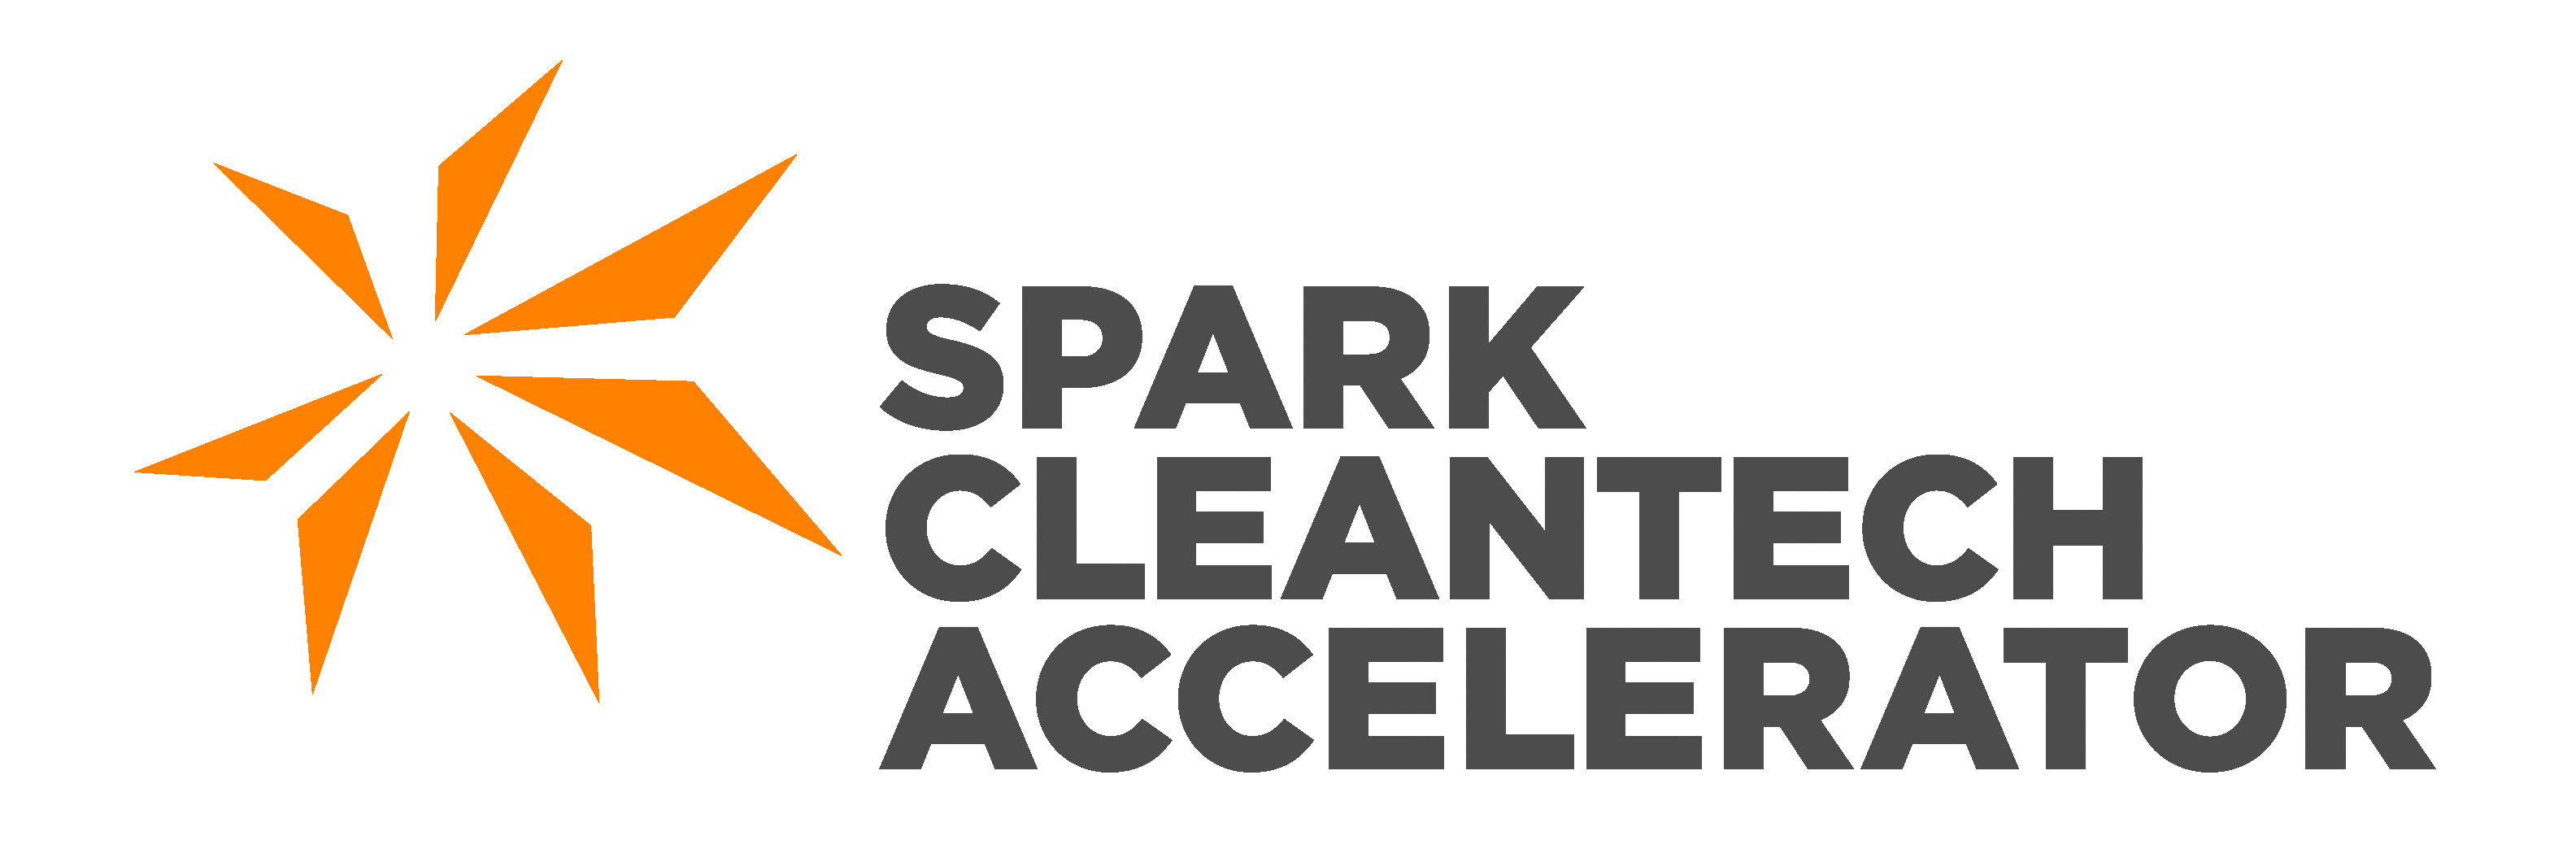 Spark Cleantech Accelerator logo.